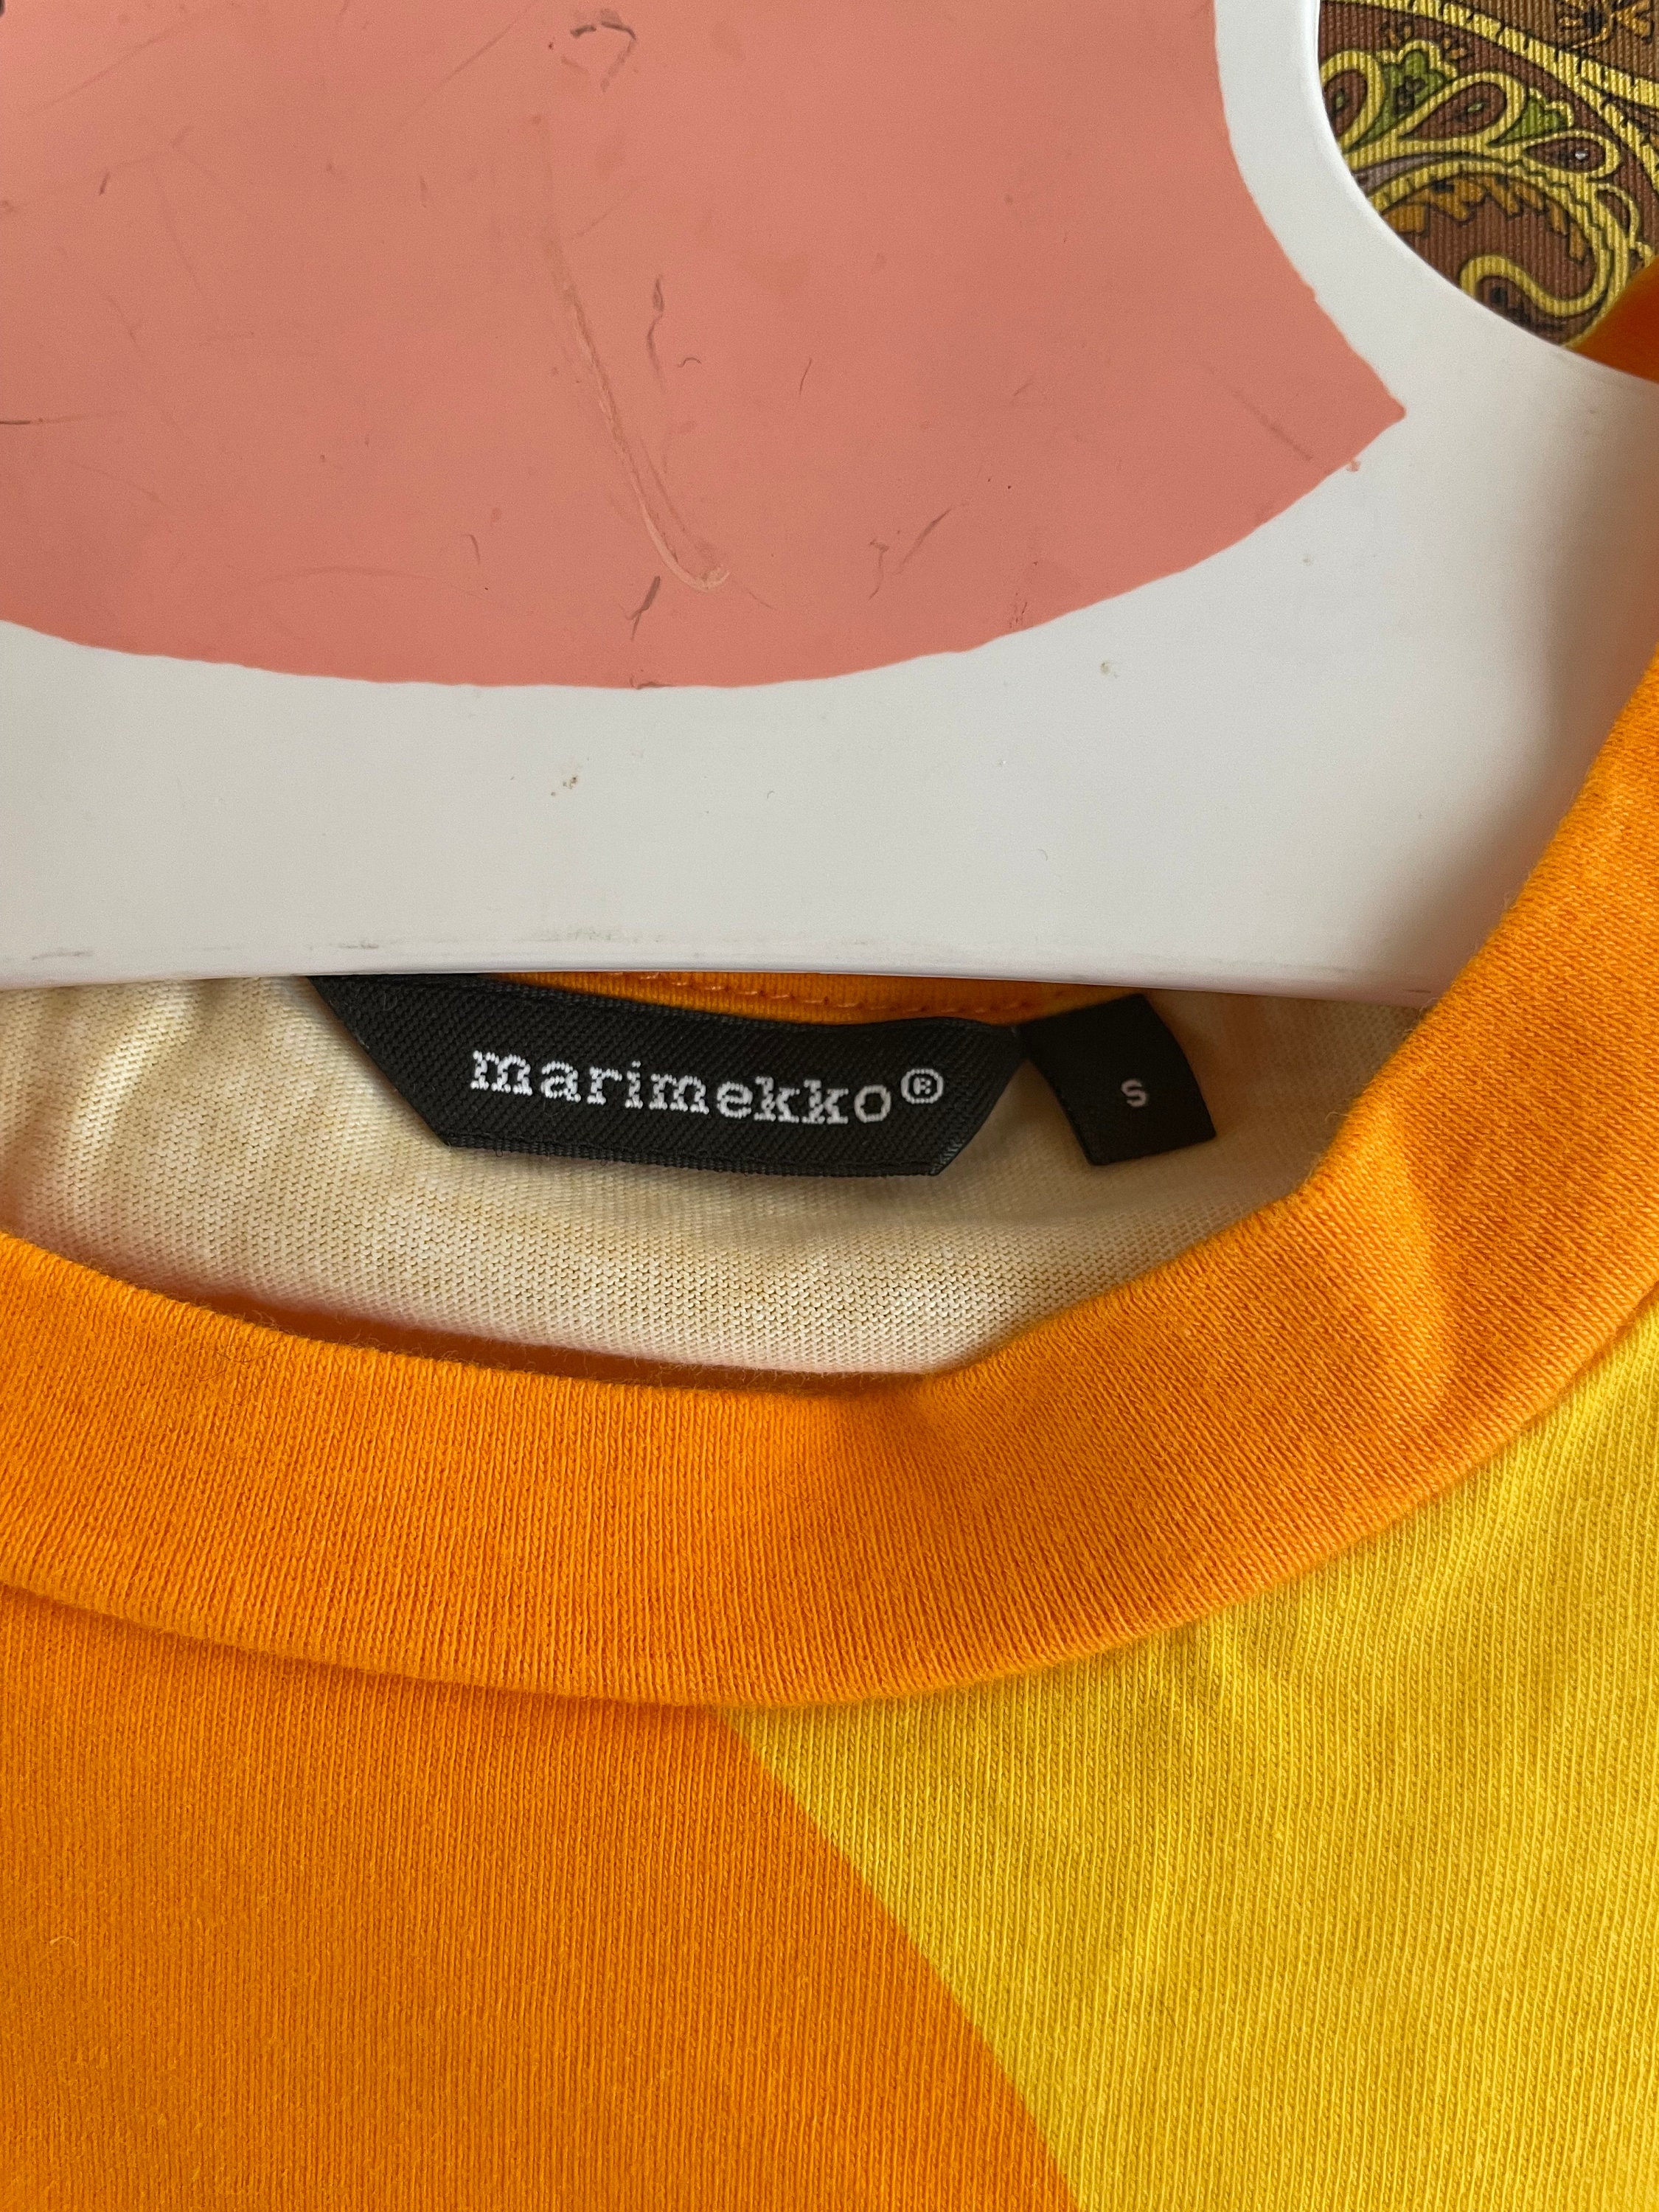 Marimekko Dress in Well Known Pattern / Maxi Dress Model Orange Yellow ...